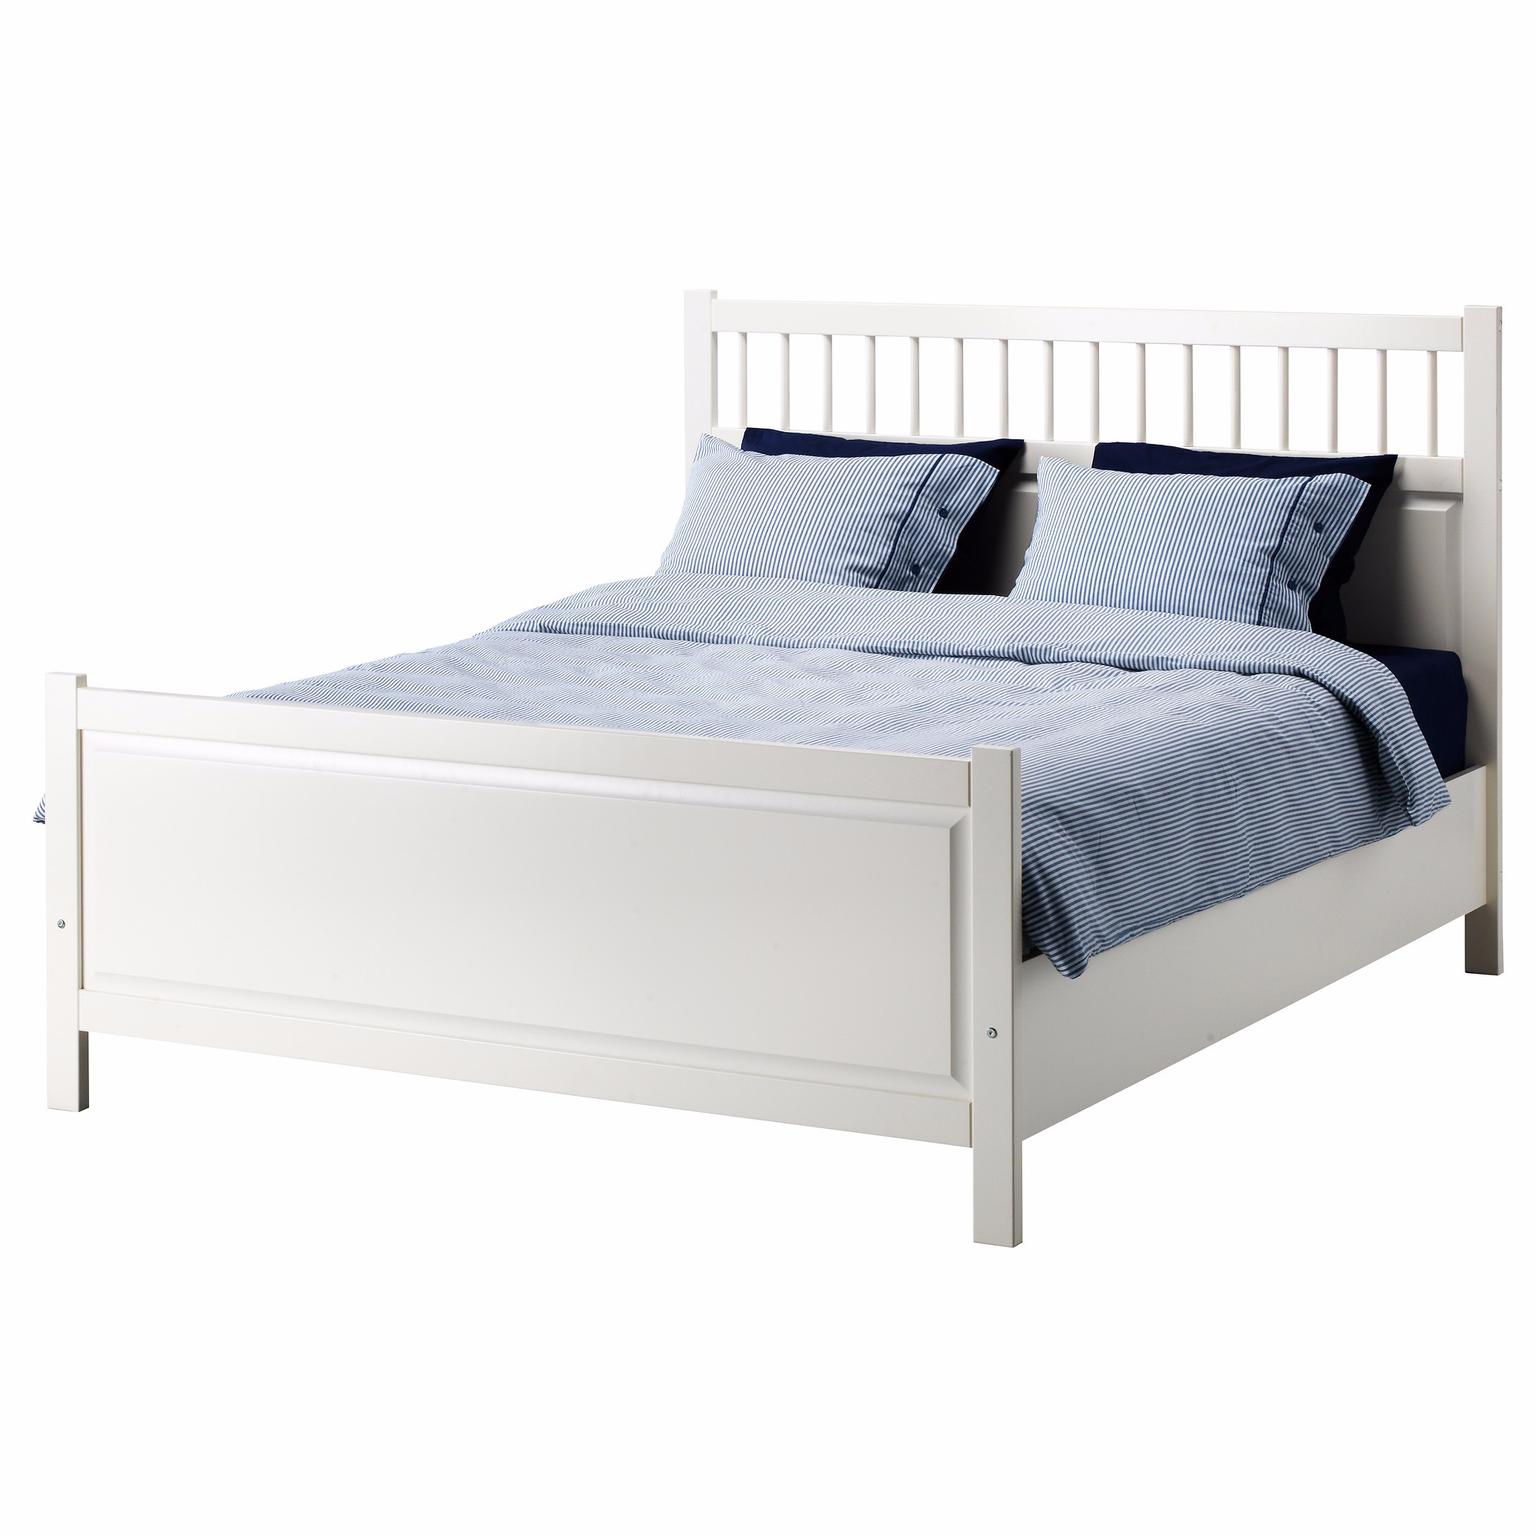 Ikea Hemnes Bed Frame 160x200 Cm, Euro King Size Bed Frame